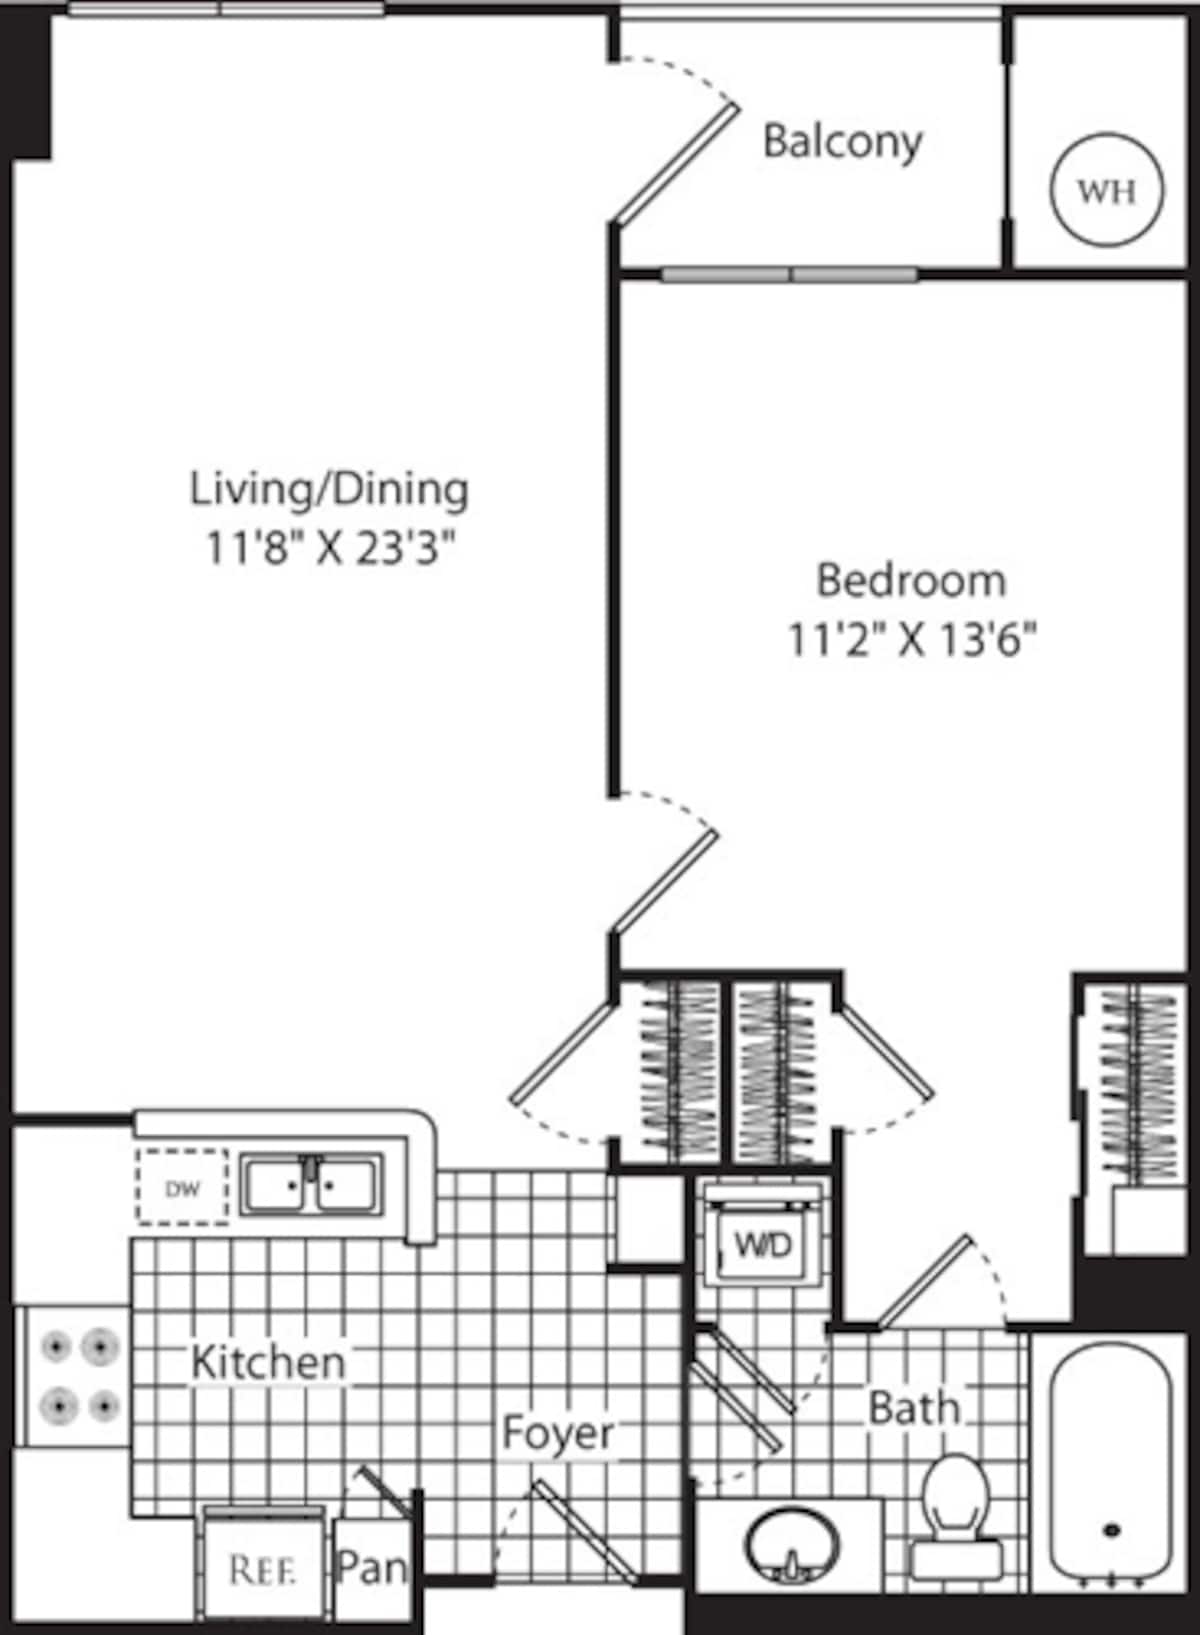 Floorplan diagram for B1, showing 1 bedroom